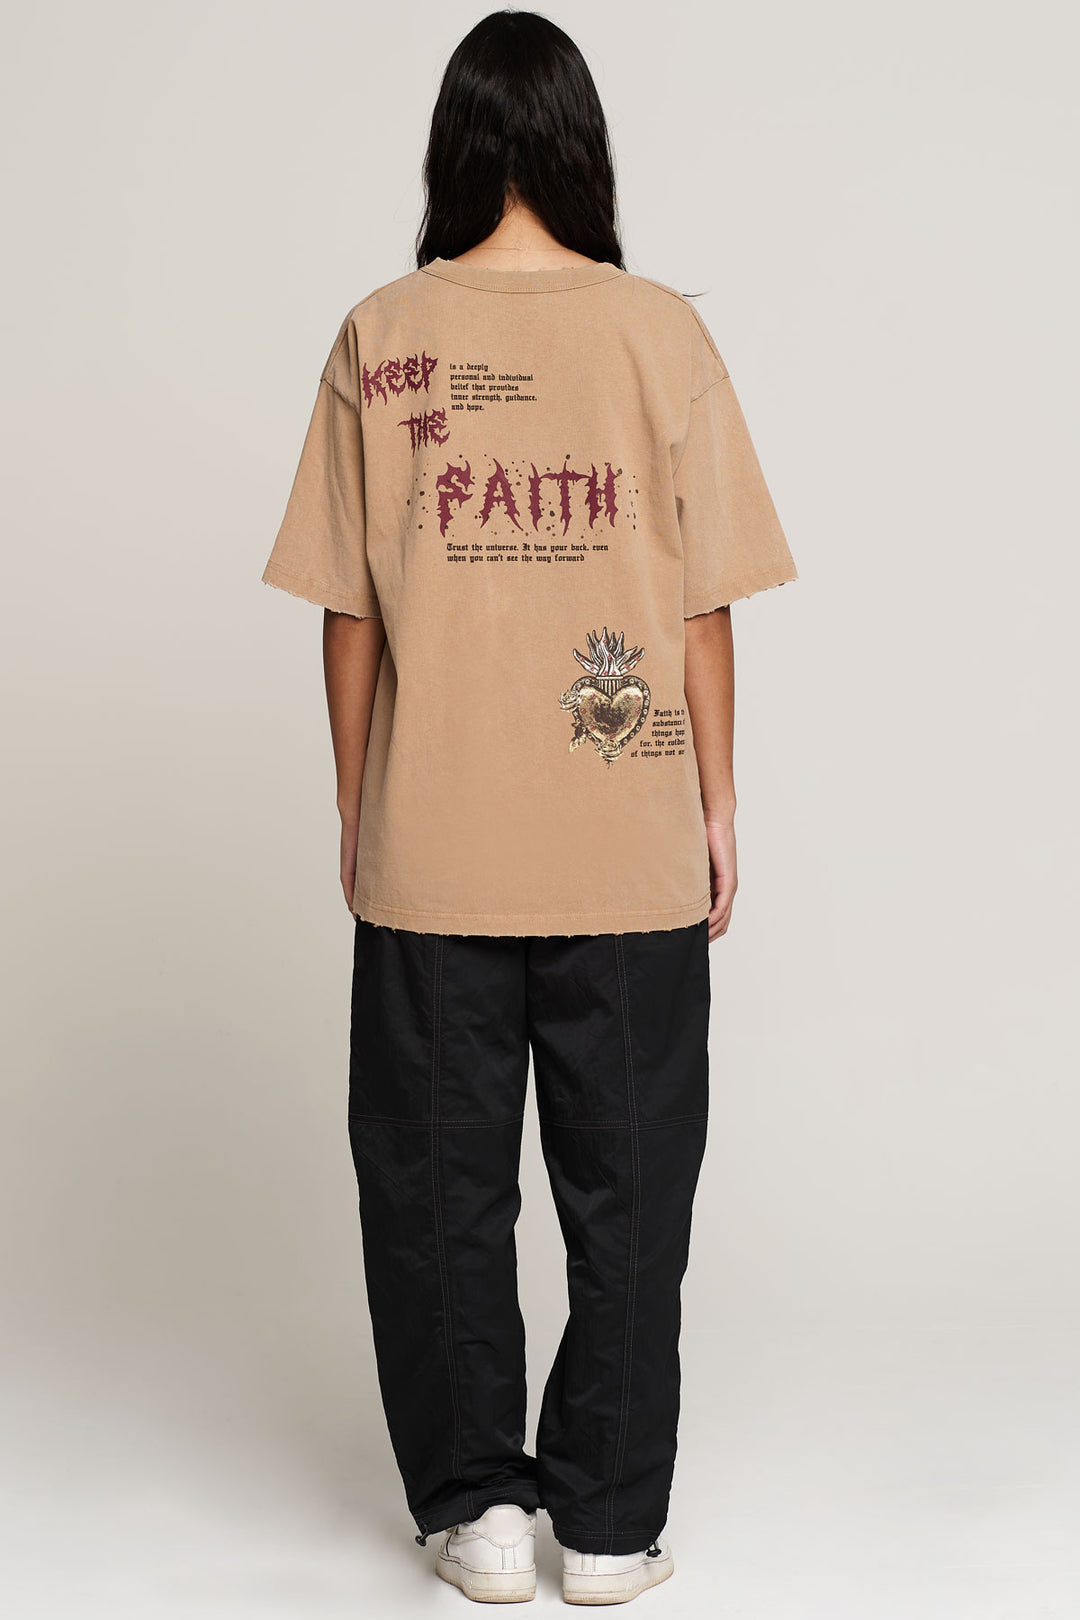 Trust the Universe Have Faith T-Shirt